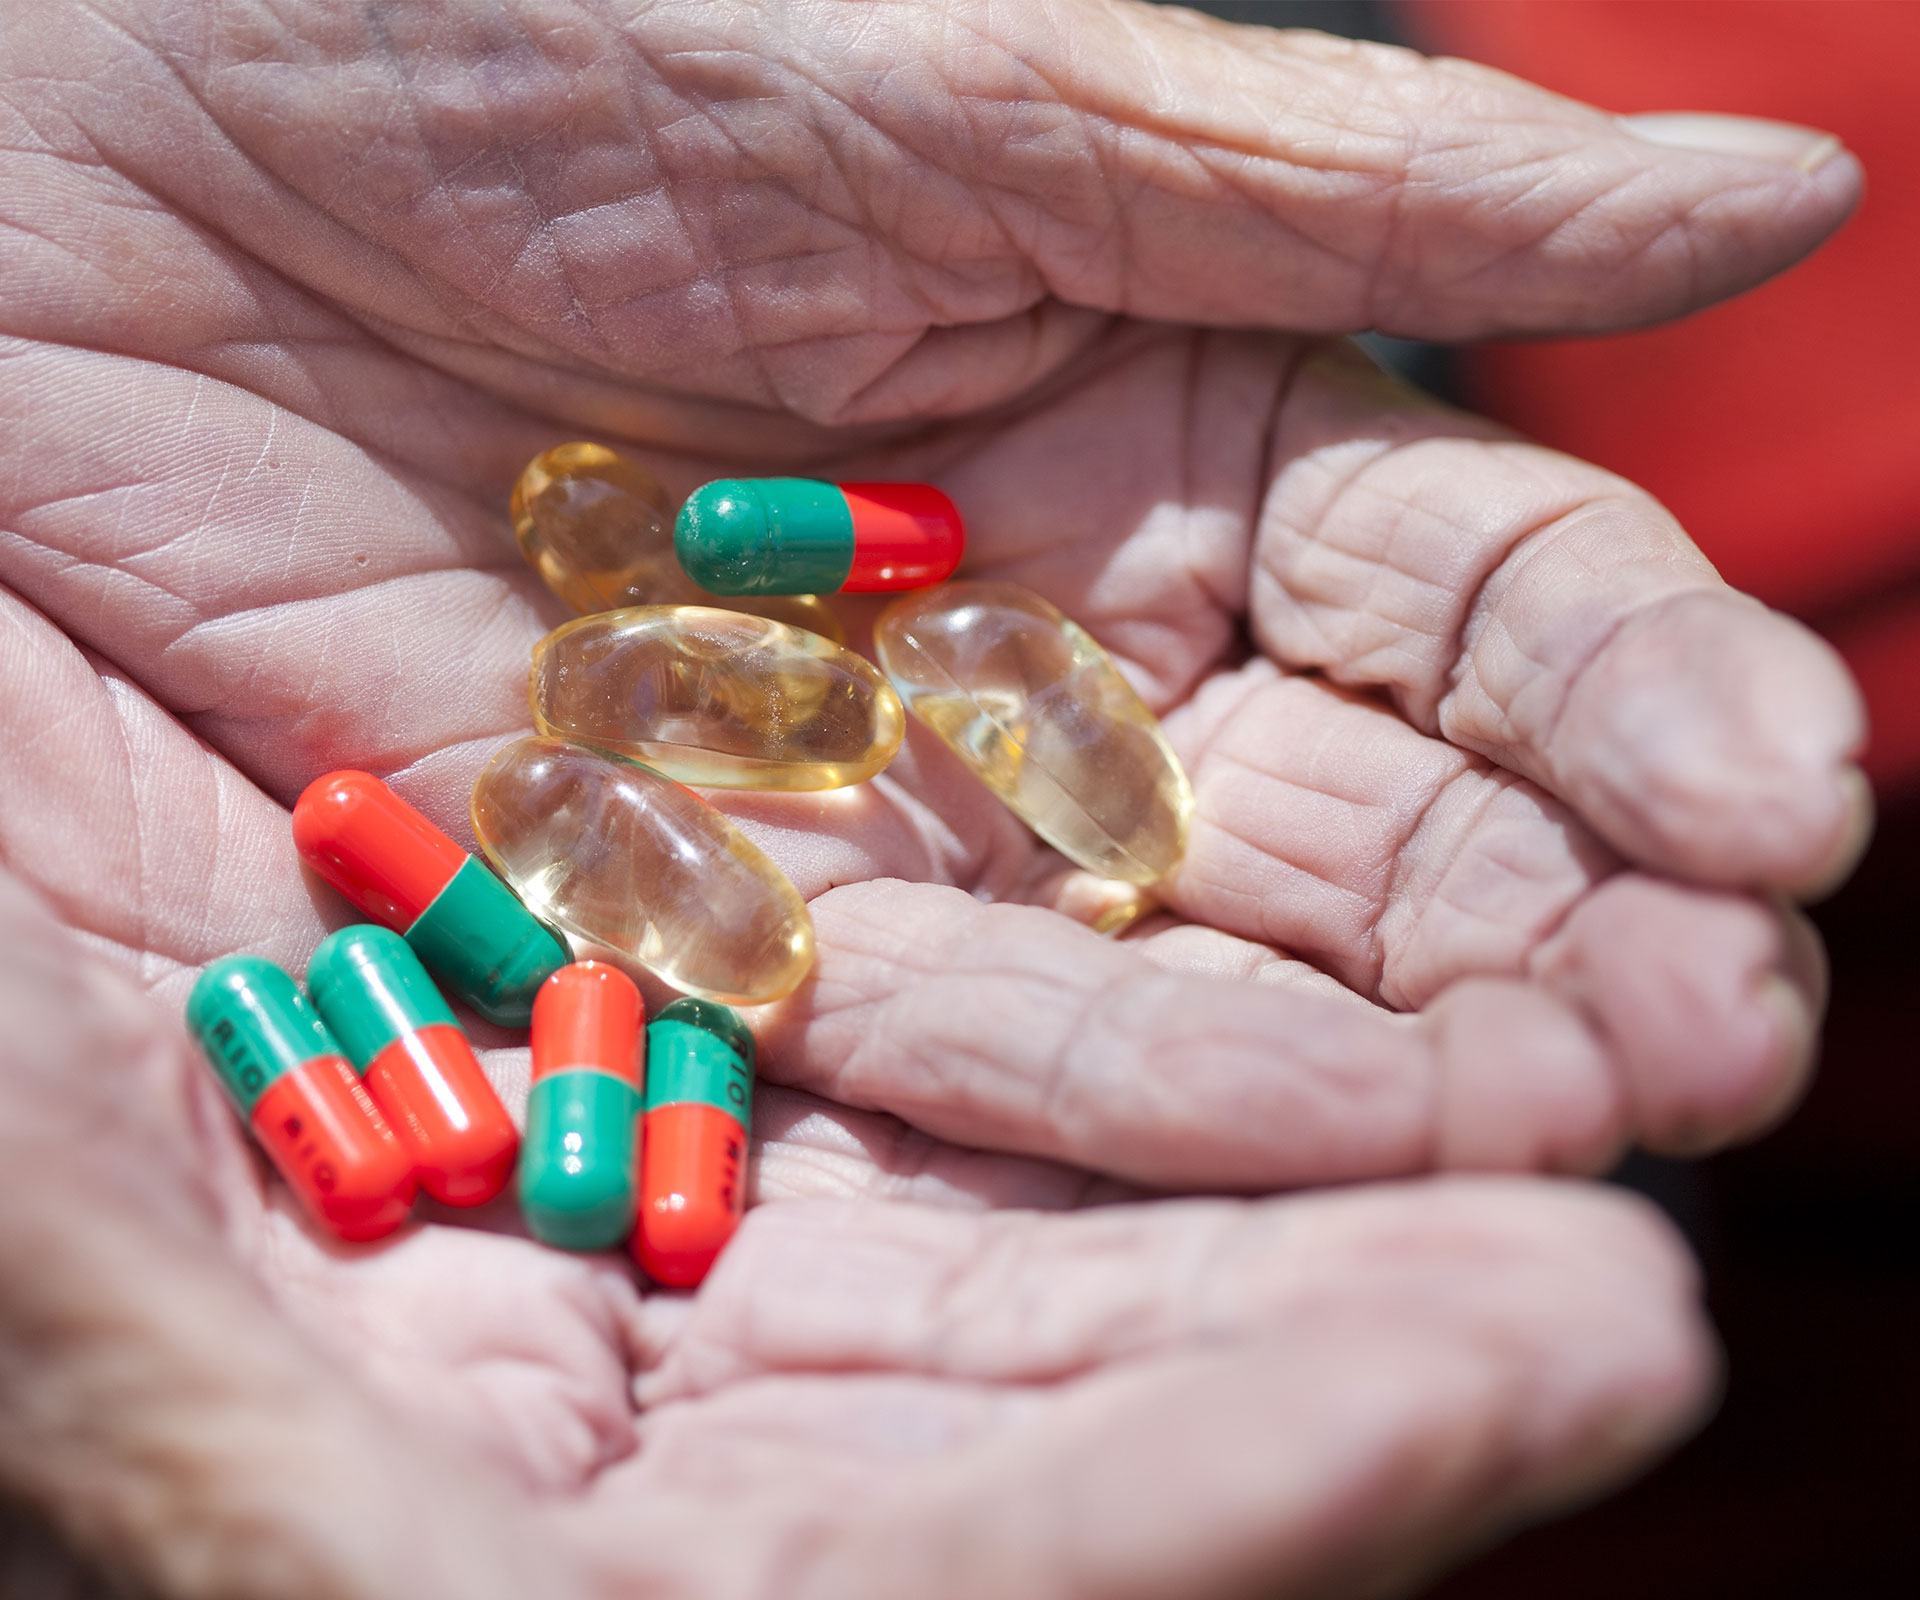 Anti-ageing wonder drug could see us living past 120